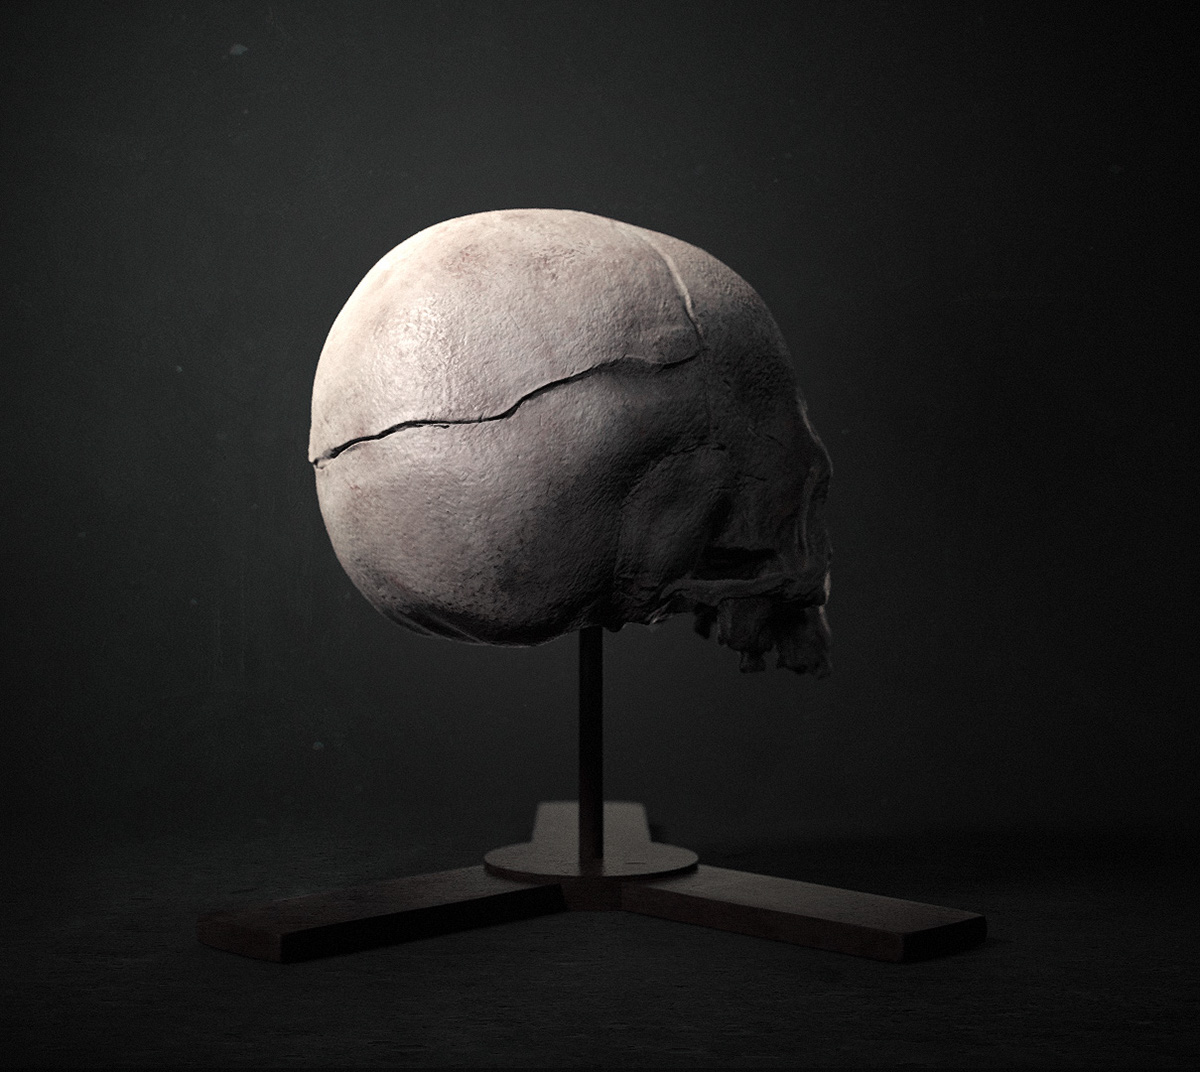 Zbrush skull anatomy study Sculpt Render Disease Syphilitic creature still life bones